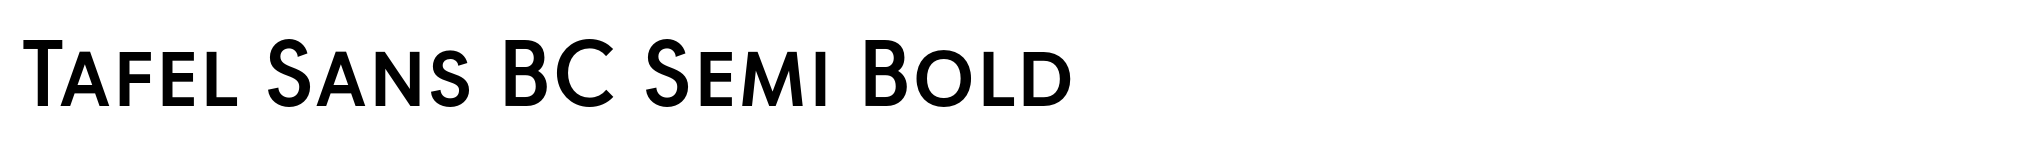 Tafel Sans BC Semi Bold image